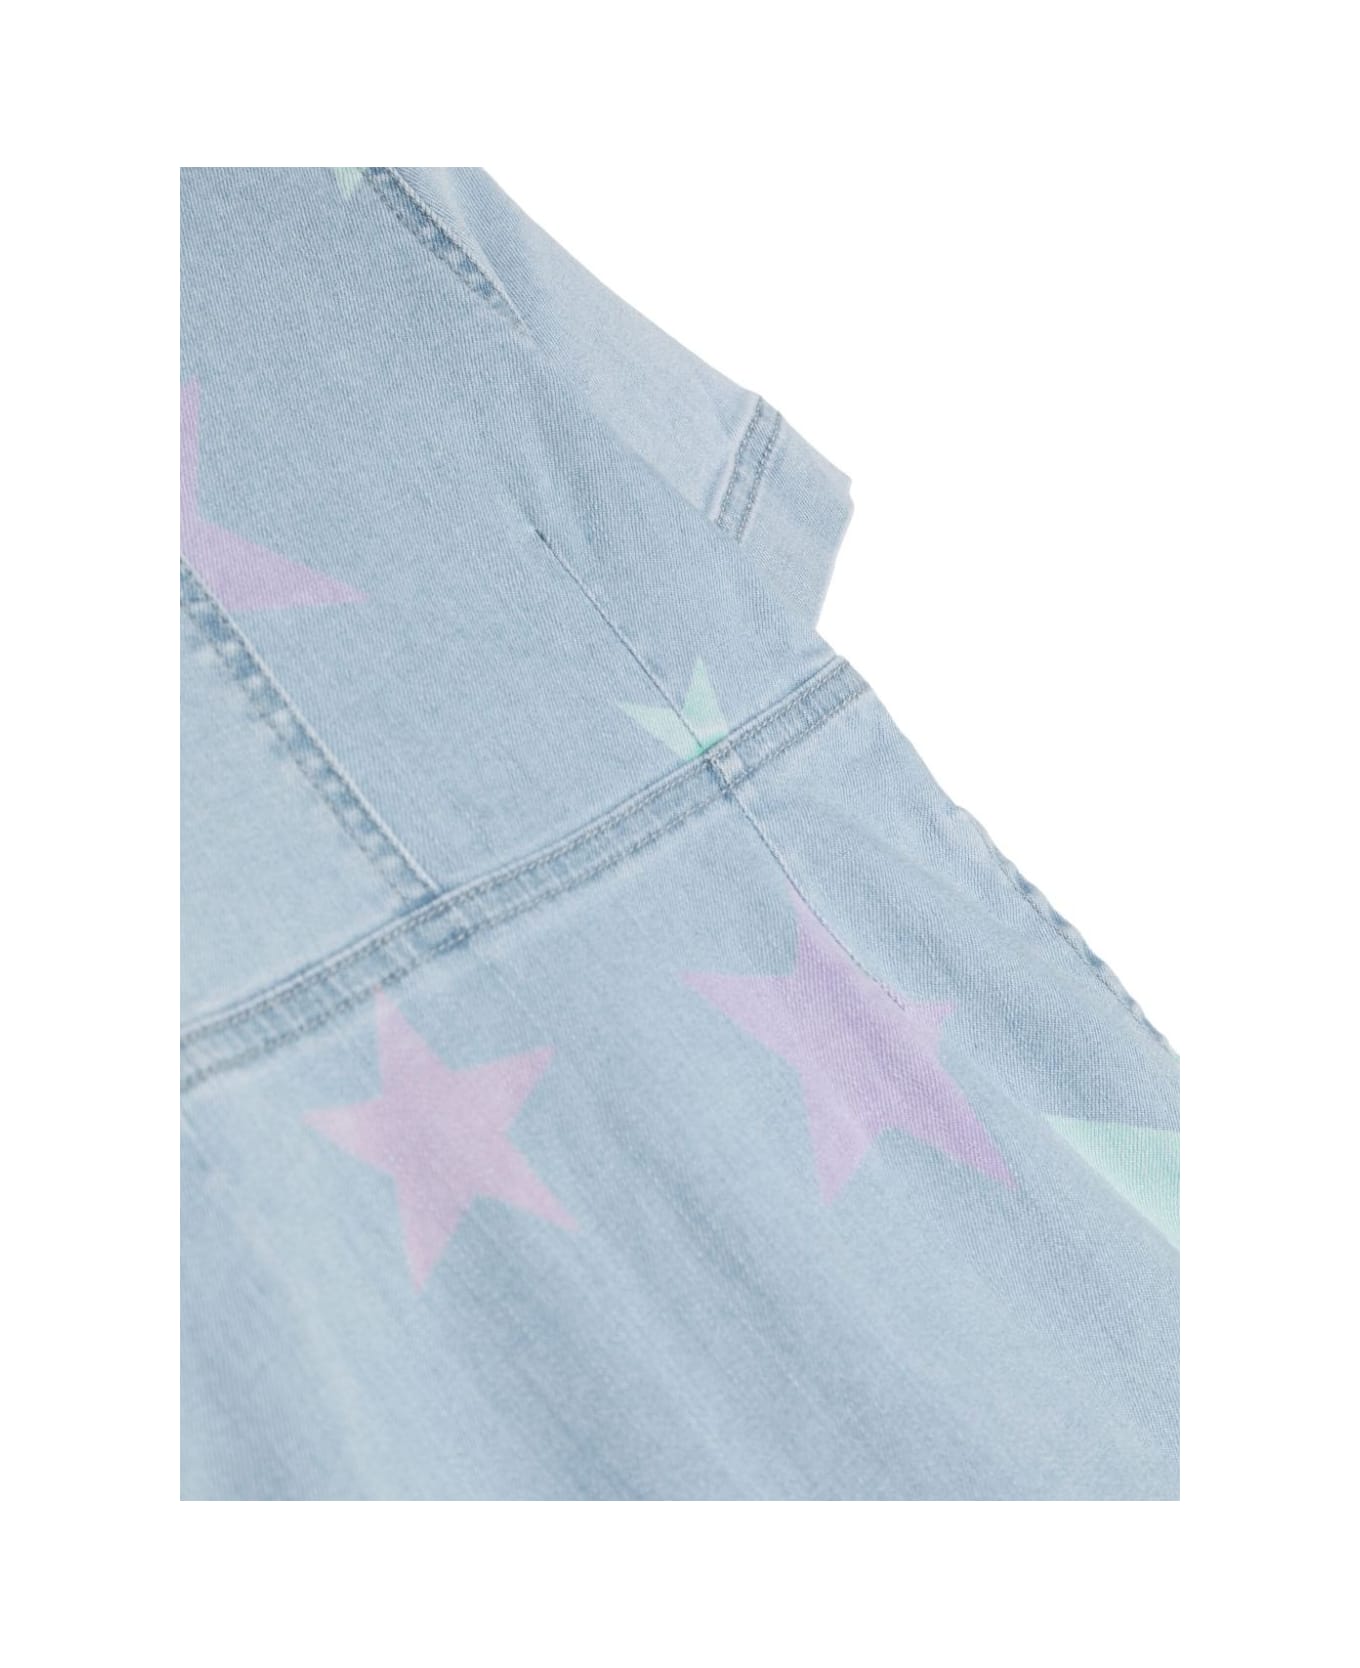 Stella McCartney Kids Denim T-shirt Dress With Star Print - Blue